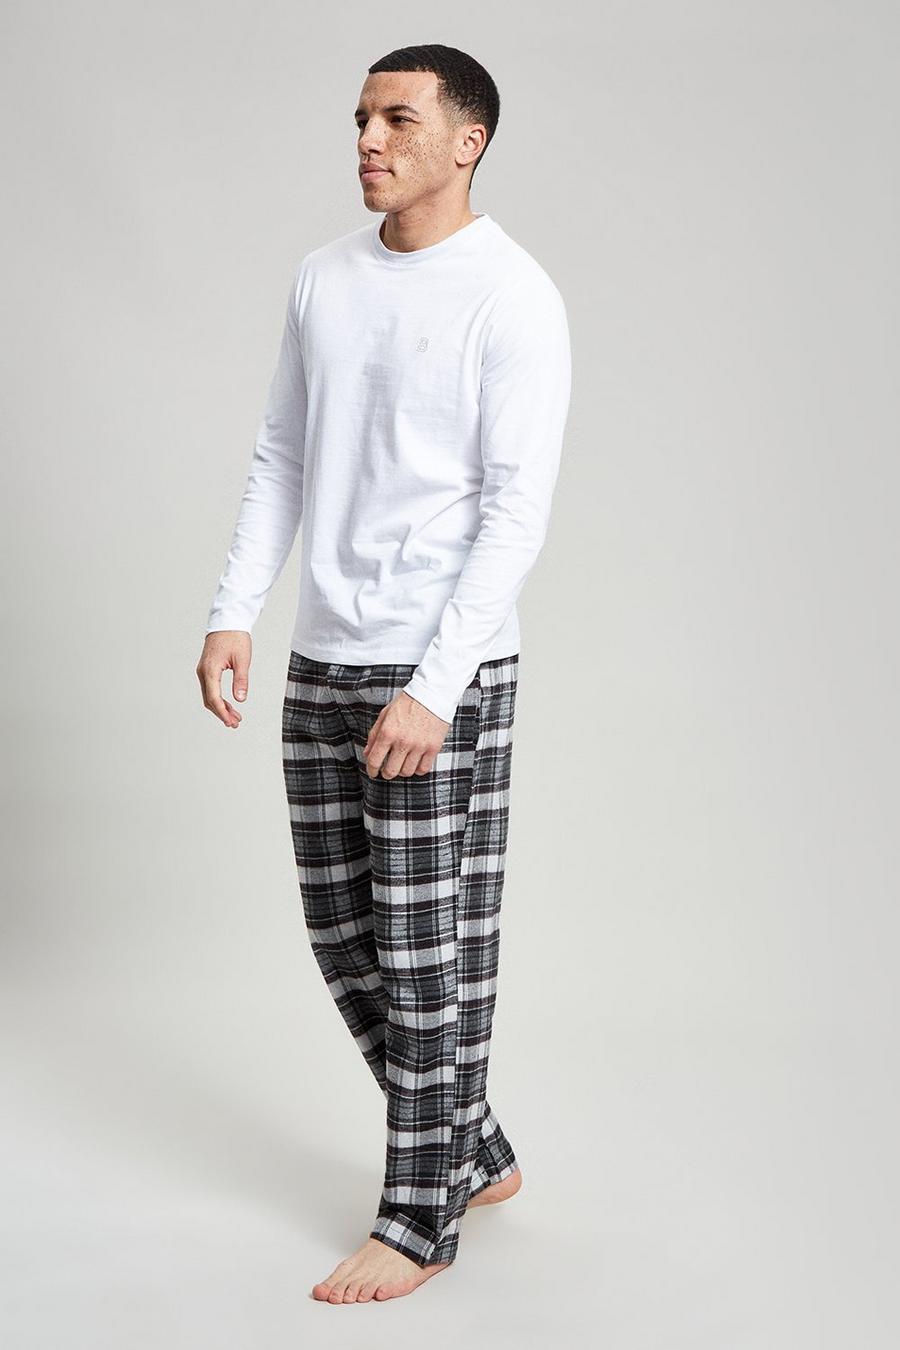 White Long Sleeve Tee & Grey Check Pyjama Set